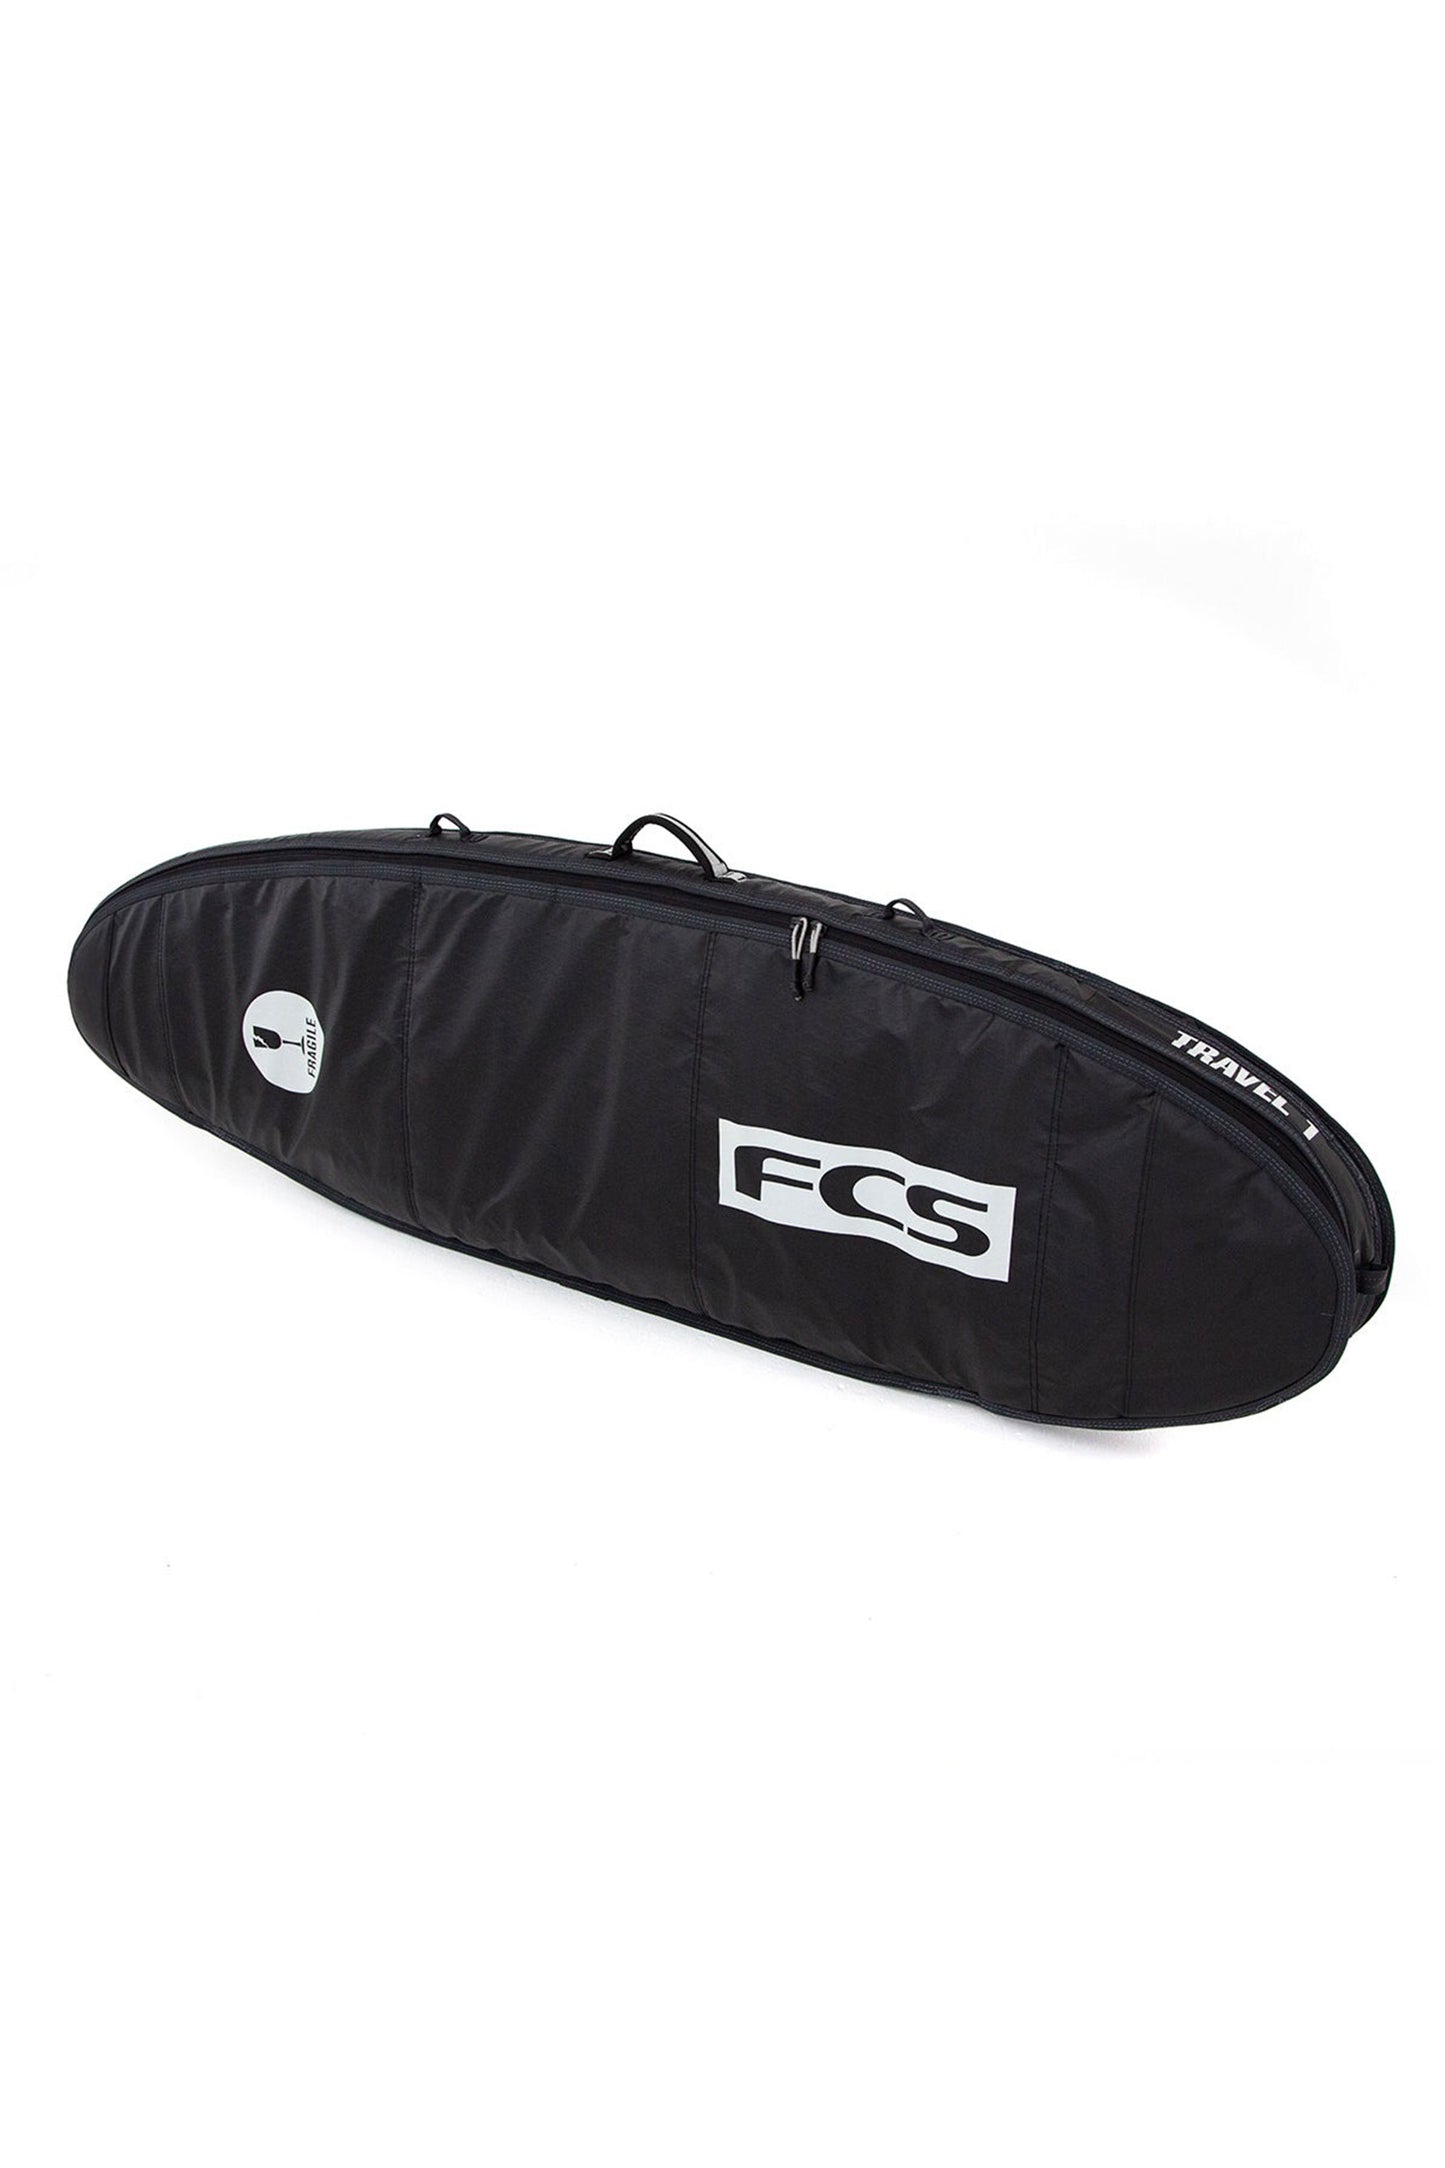     Pukas-Surf-Shop-FCS-Boardbags-Travel-Fun-board-Black